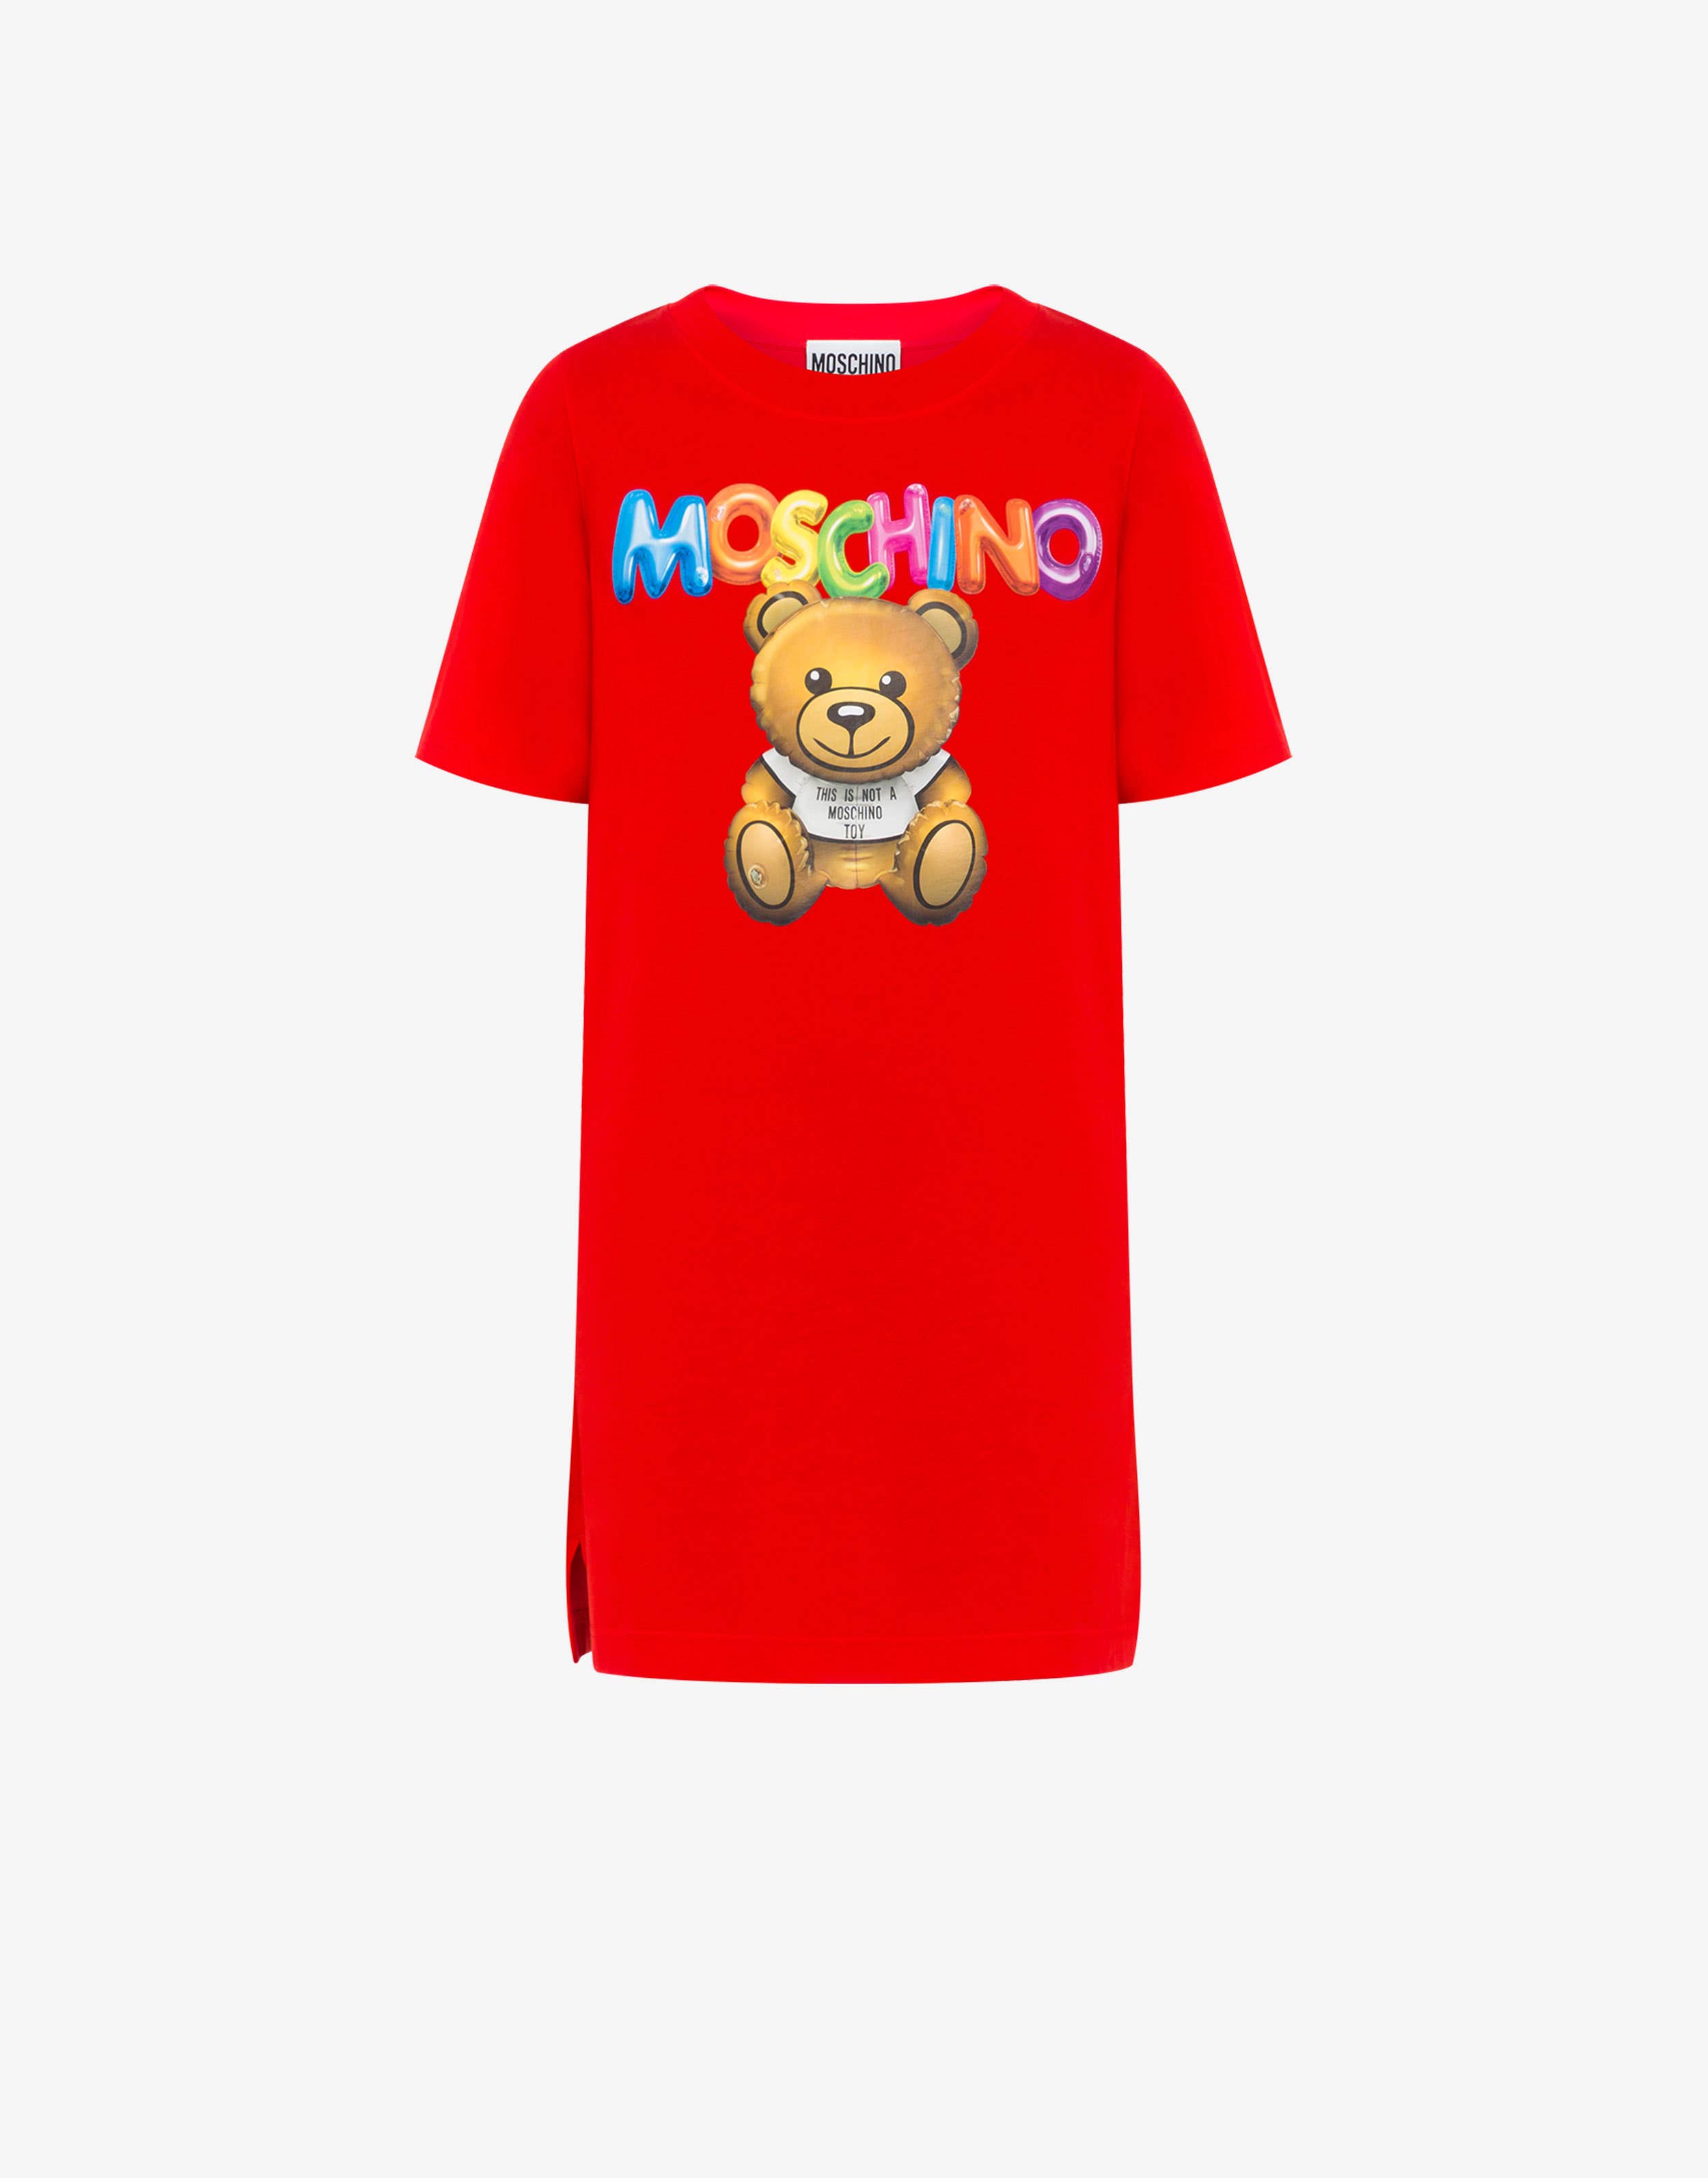 Moschino Clothing Women | Moschino Official Store